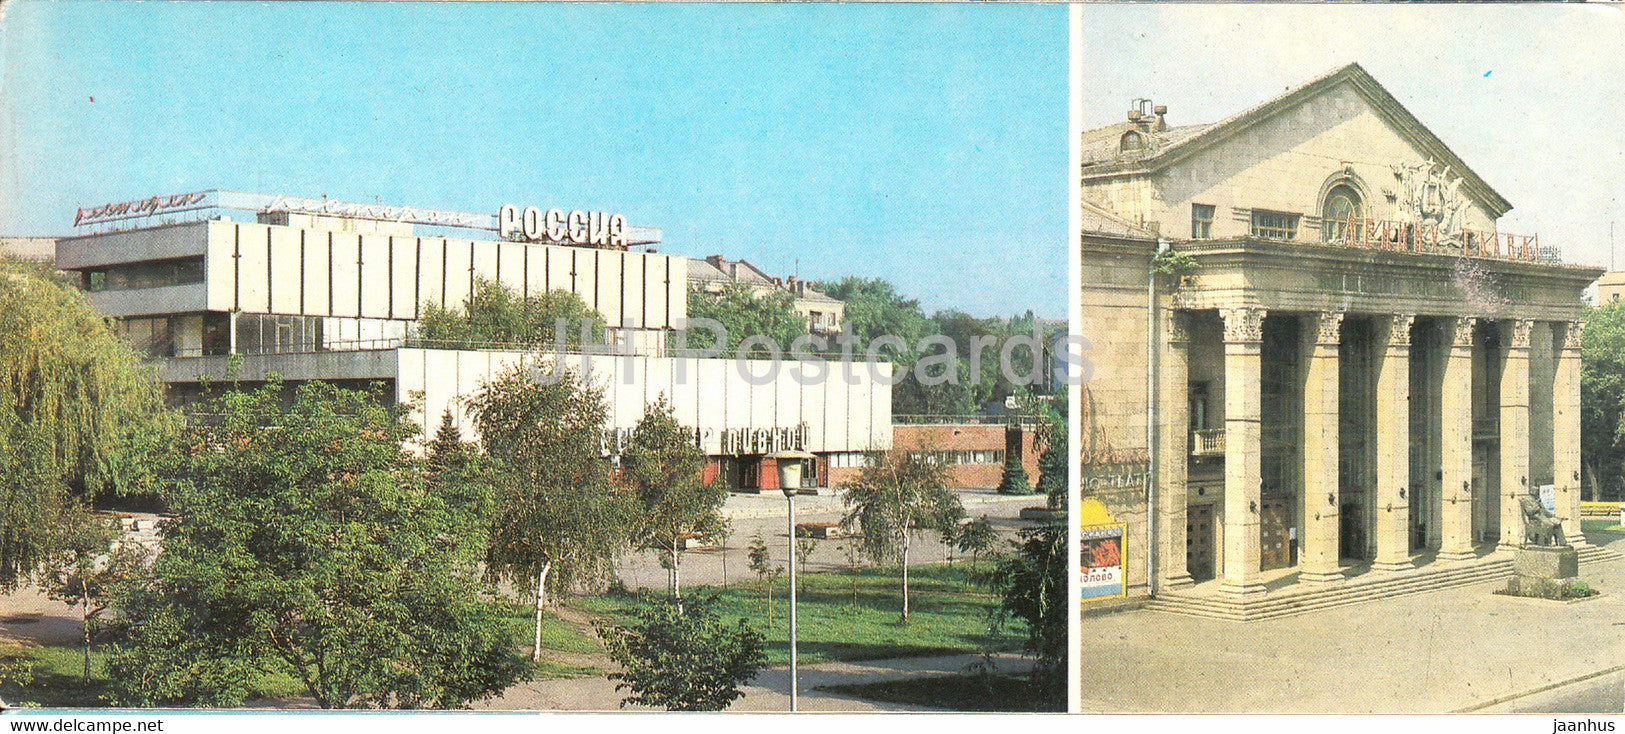 Zaporizhzhia - restaurant Rossiya - Glinka Concert Hall - 1984 - Ukraine USSR - unused - JH Postcards